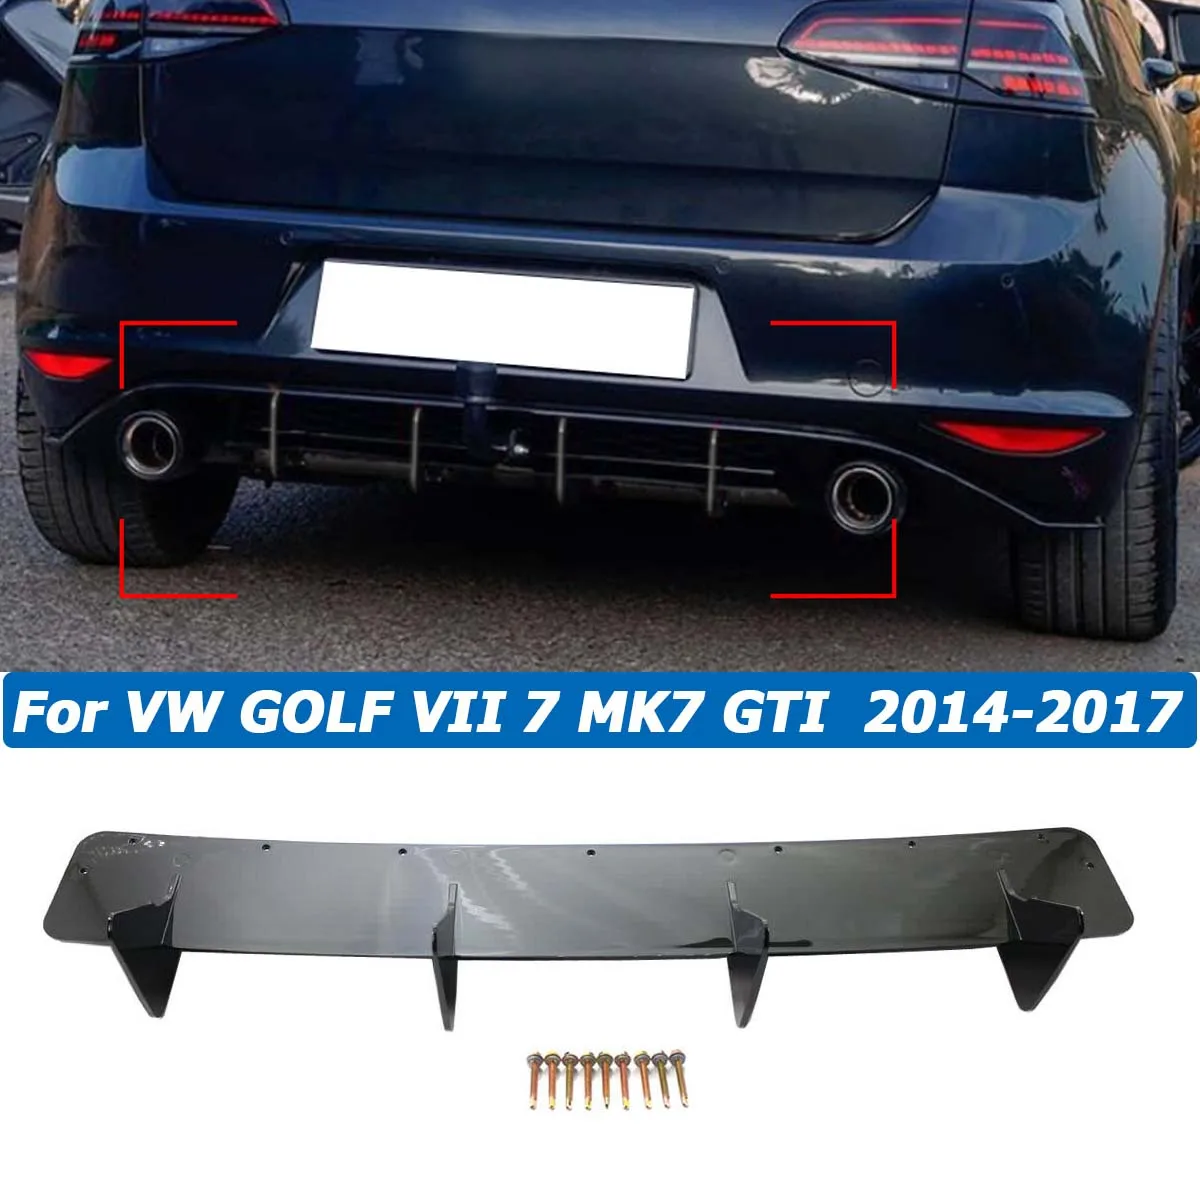 

Rear Bumper Diffuser For Volkswagen VW GOLF VII 7 MK7 GTI 2014-2017 Splitter Valance Spoiler Lip Body Kit Car Accessories